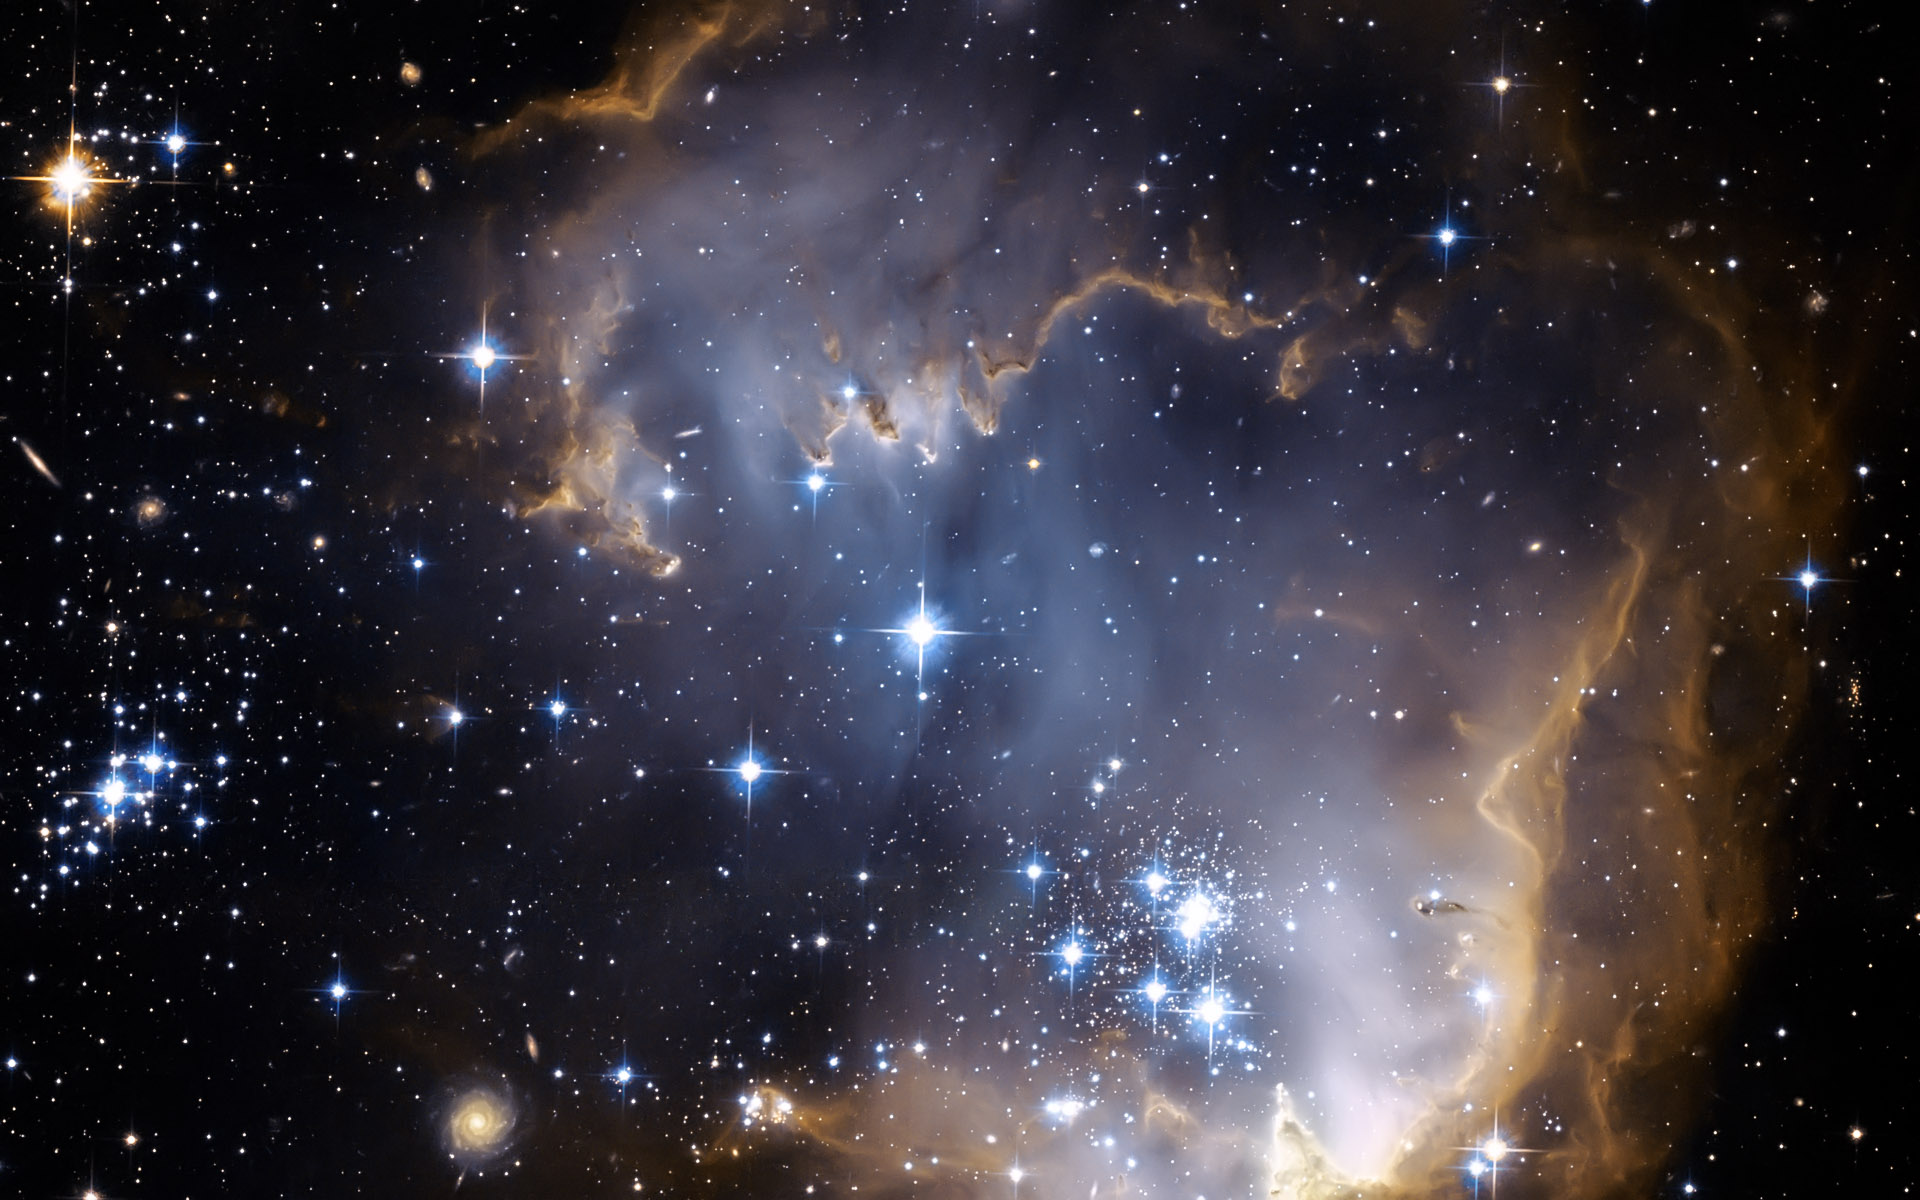 Hubble Telescope Photos